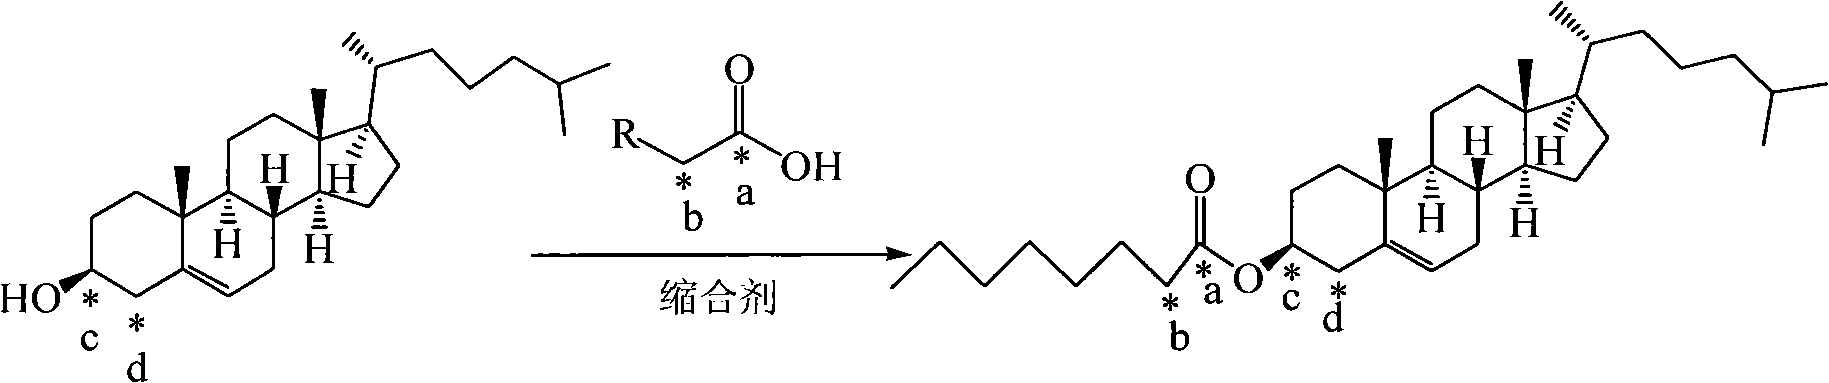 Method for synthesizing 13C-labeled cholesterol carboxylic ester